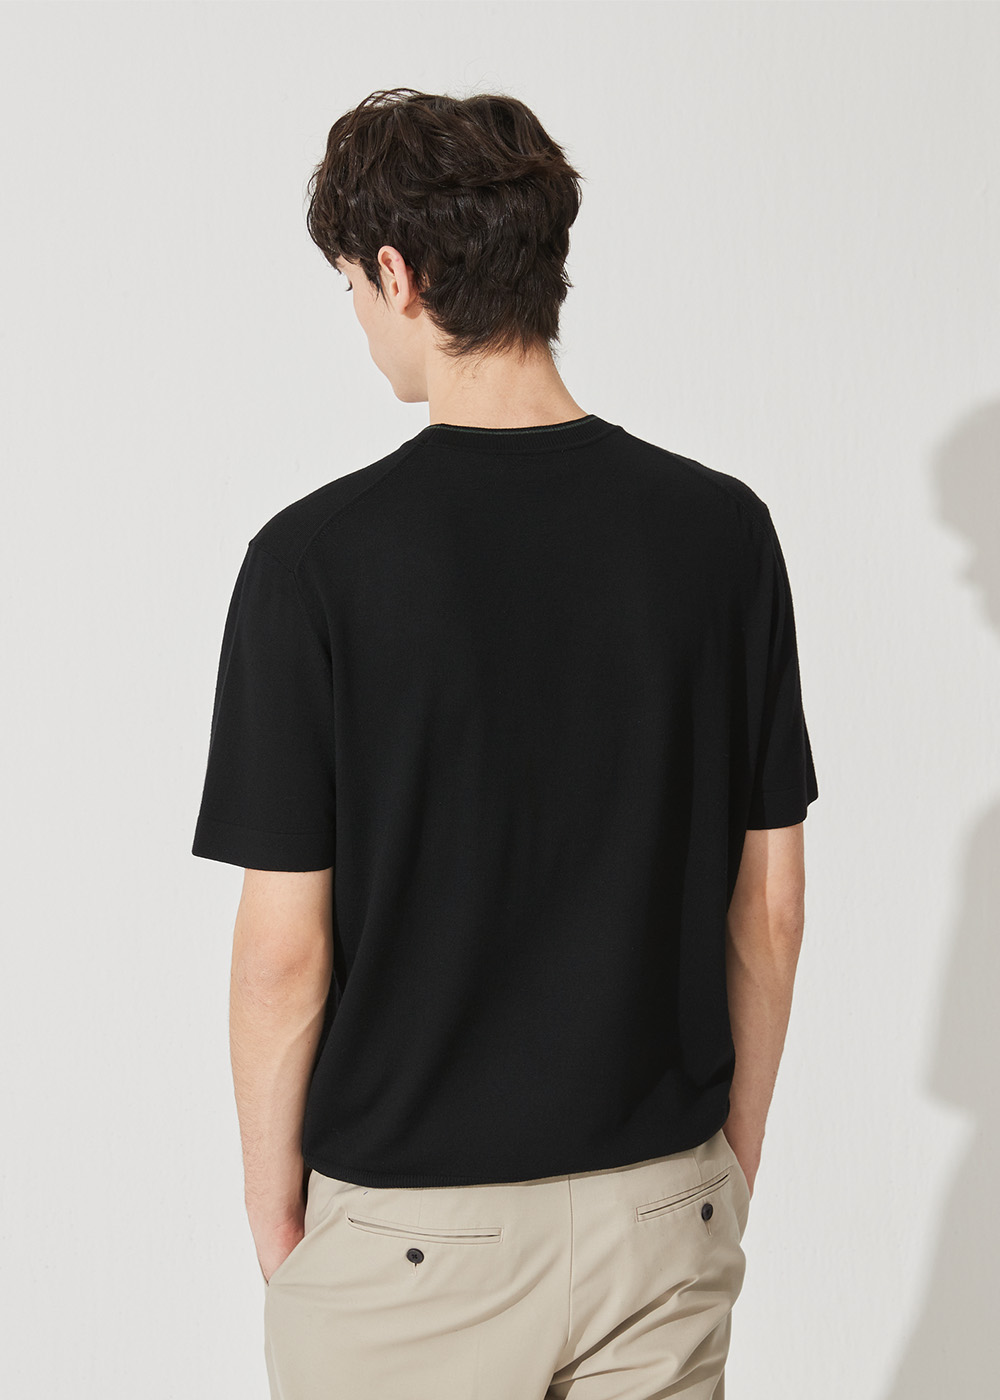 Line Color Round half sleeve pullover (Black)